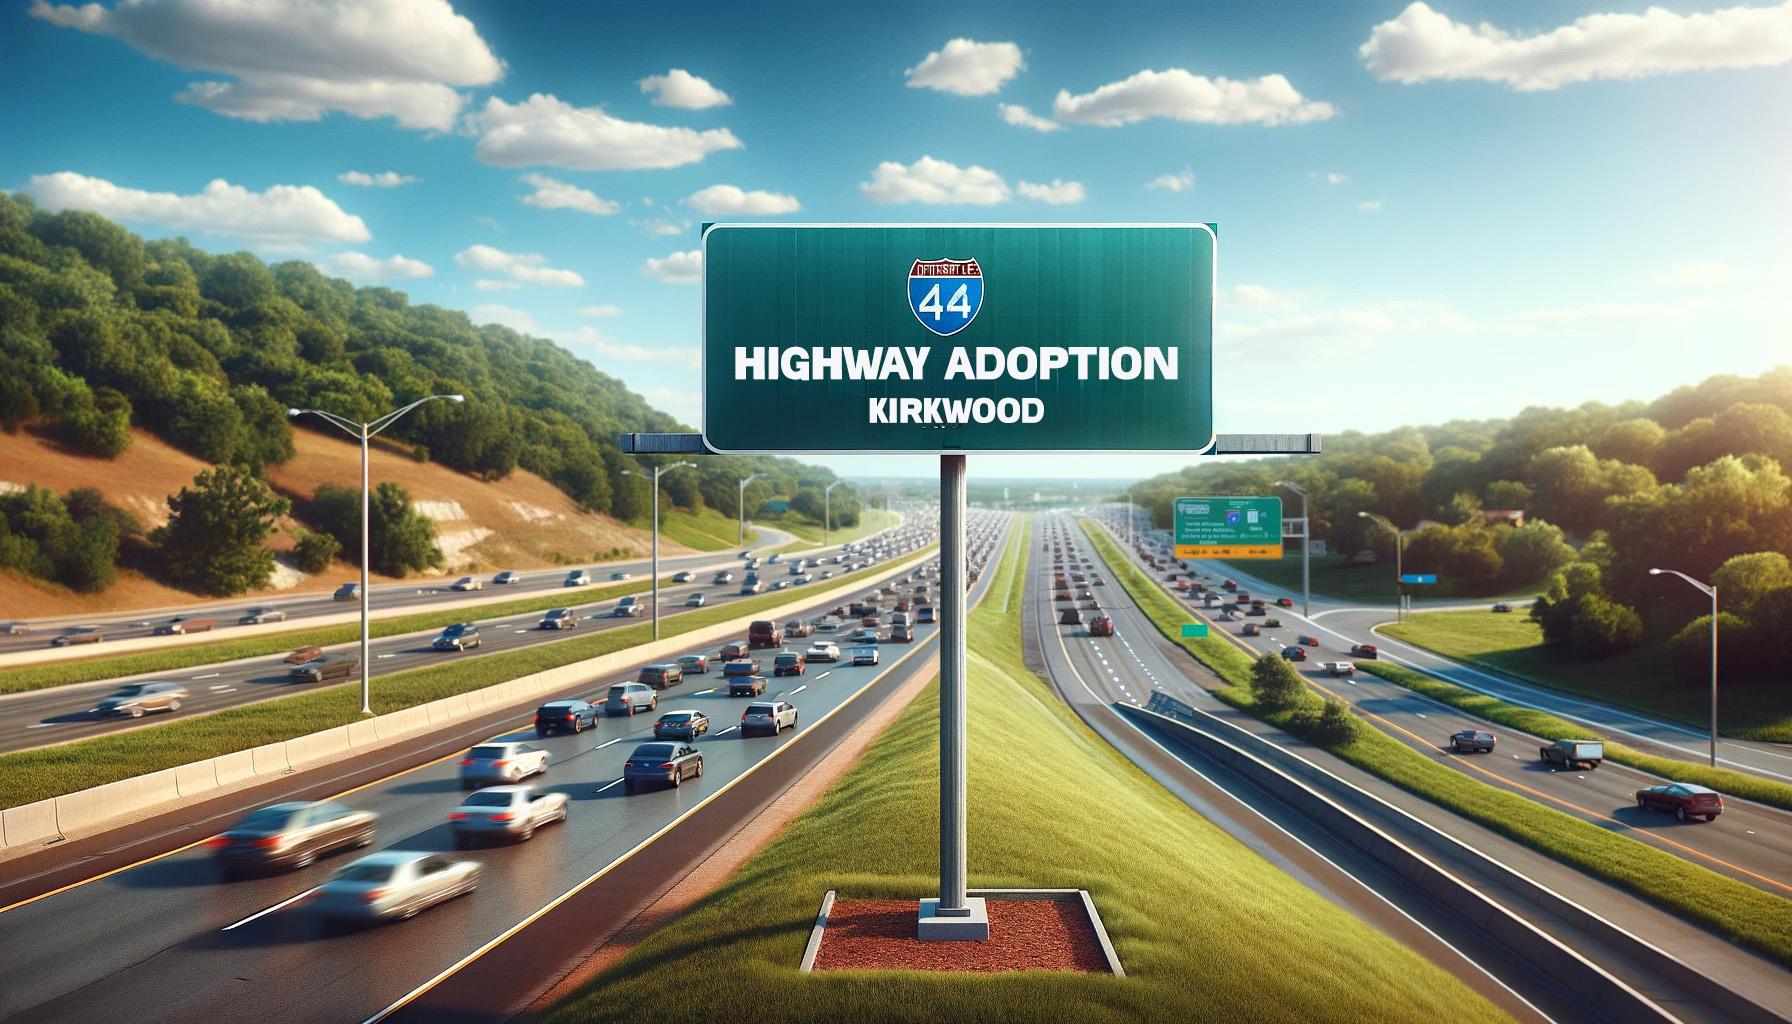 Highway Adoption Program news graphic